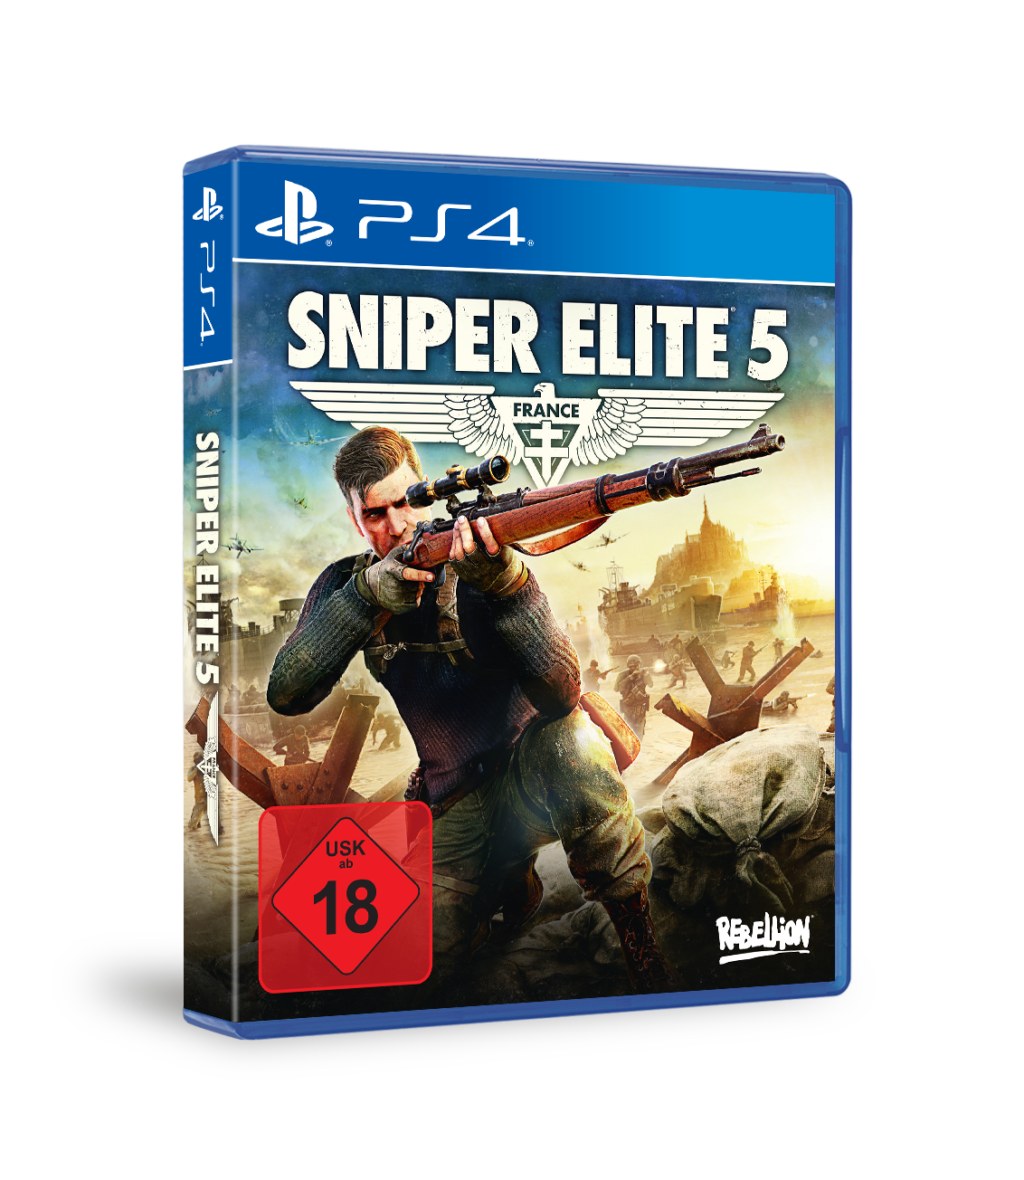 sniper-elite-5-cinematic-trailer-key-visual-gematsu